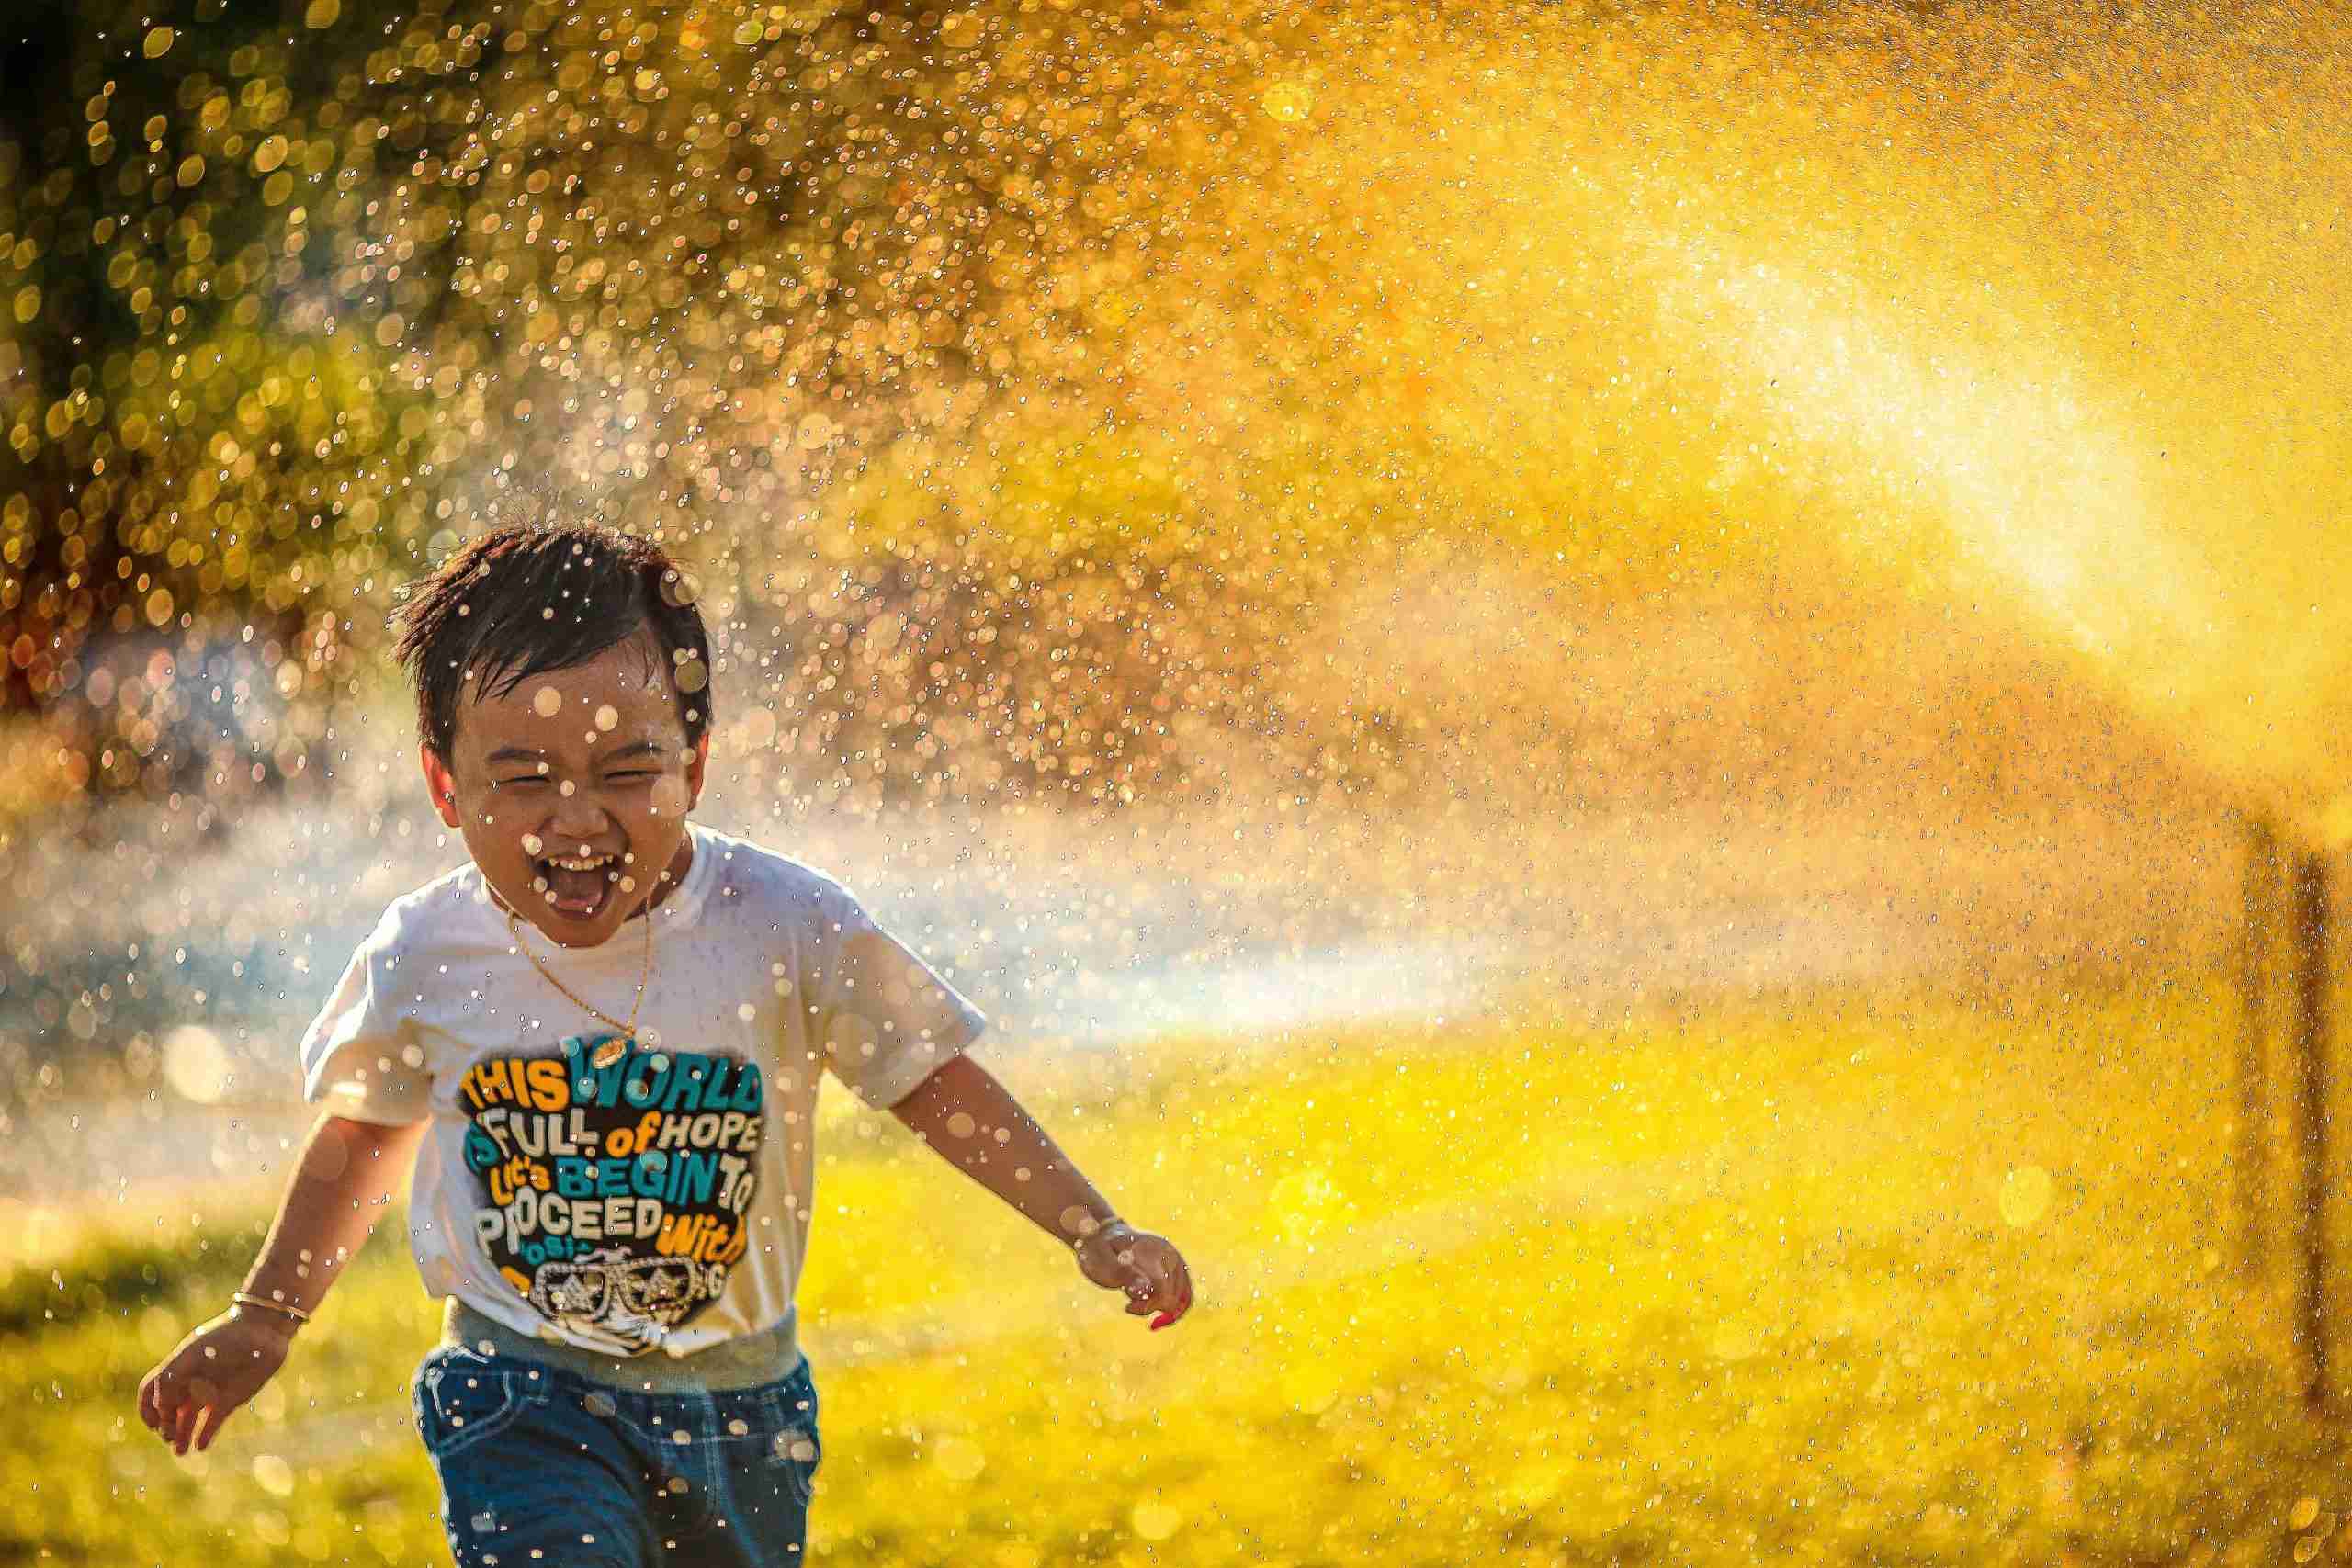 A child running through splashes of water